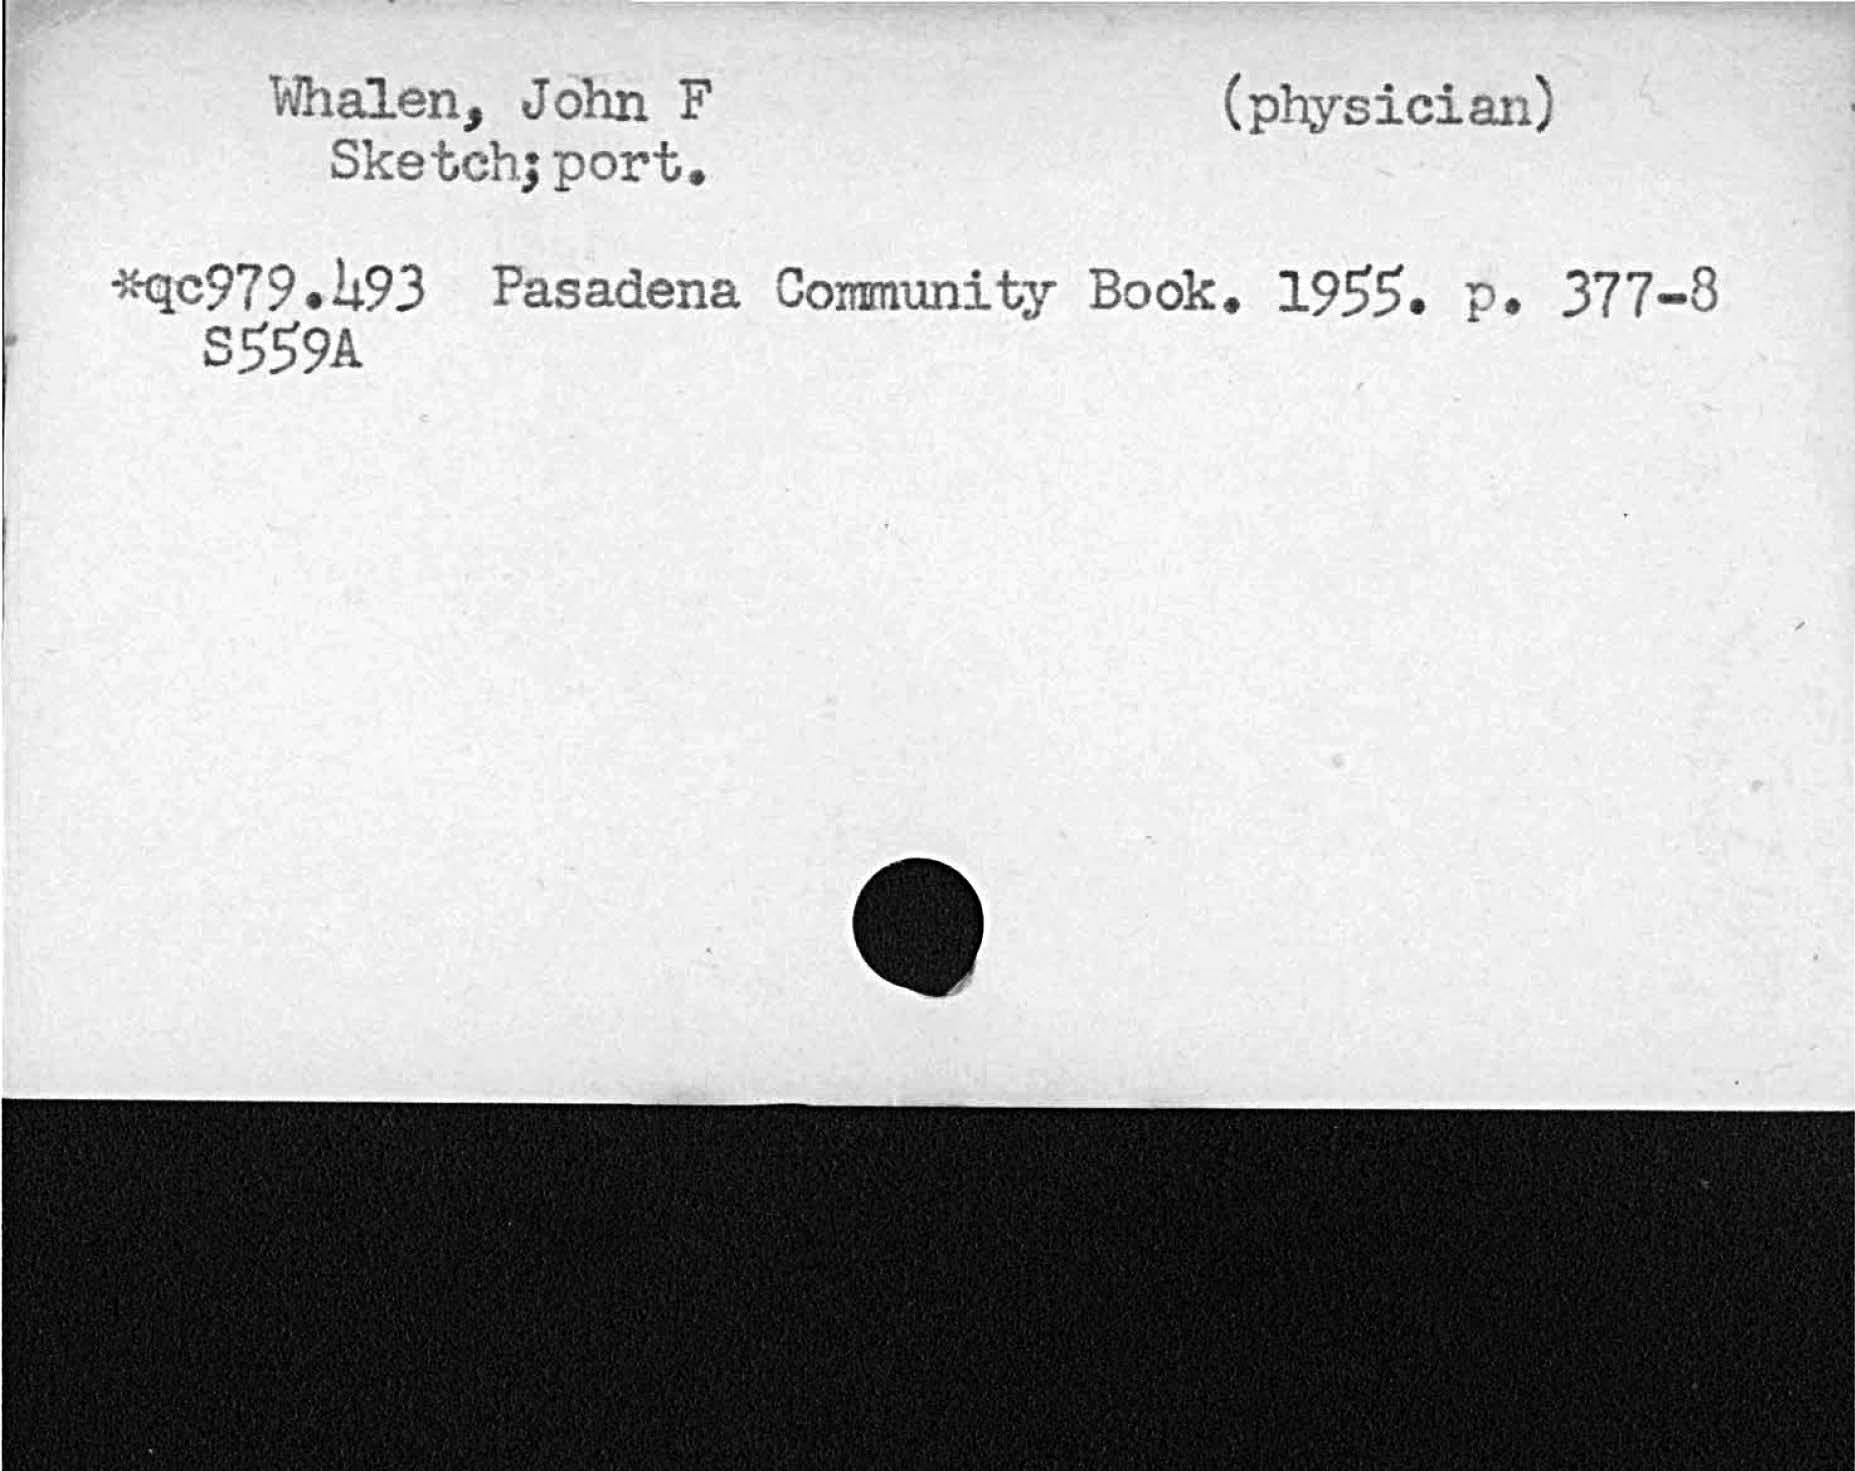 Whalen, John F physicianSketch; port.Pasadena Community Book. 1955. p. 377- 8     S559A  qc979. 493